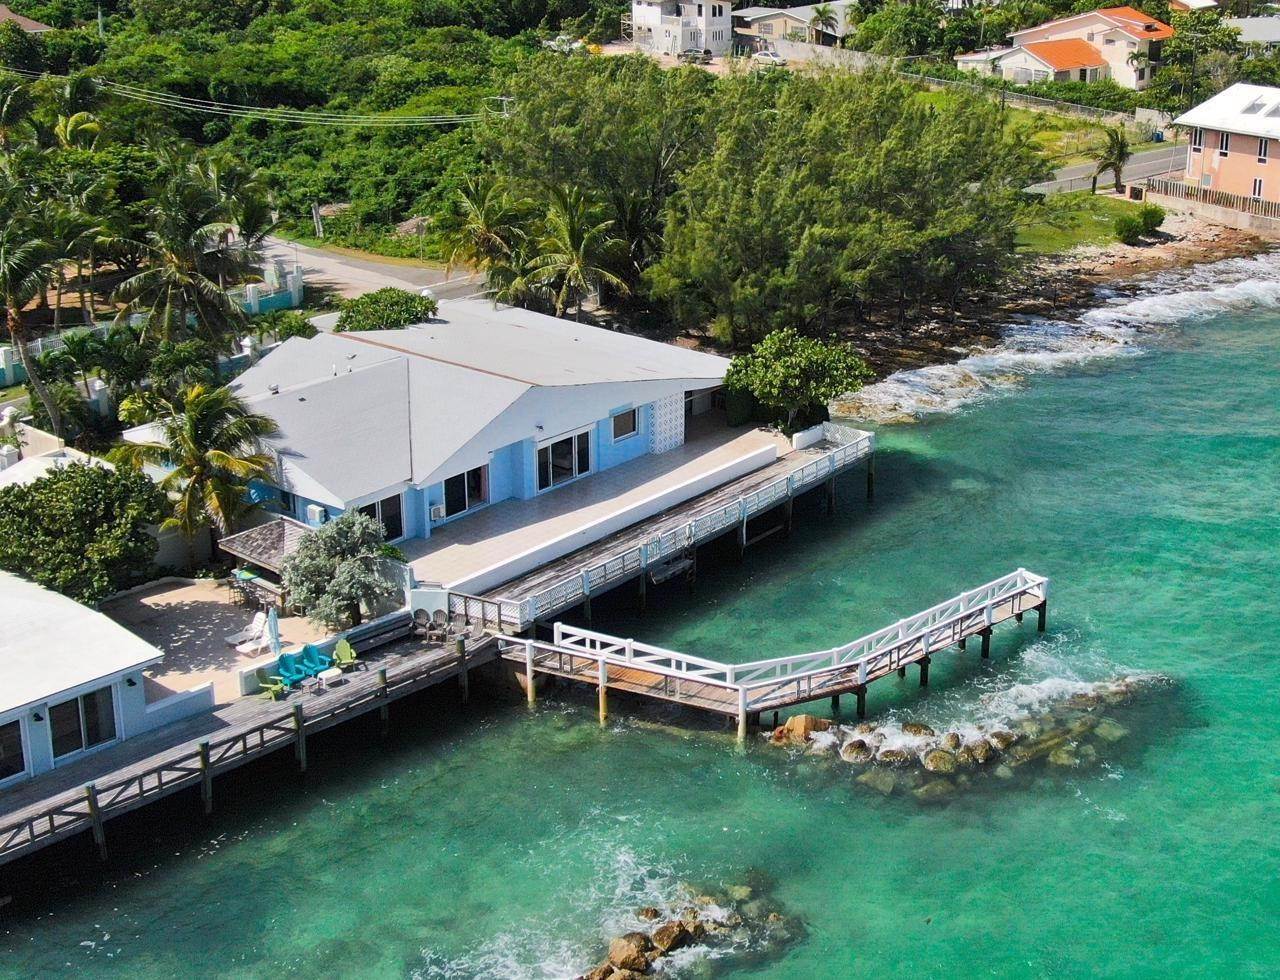 Single Family Homes for Sale at Winton Estates, Winton, Nassau and Paradise Island, Bahamas